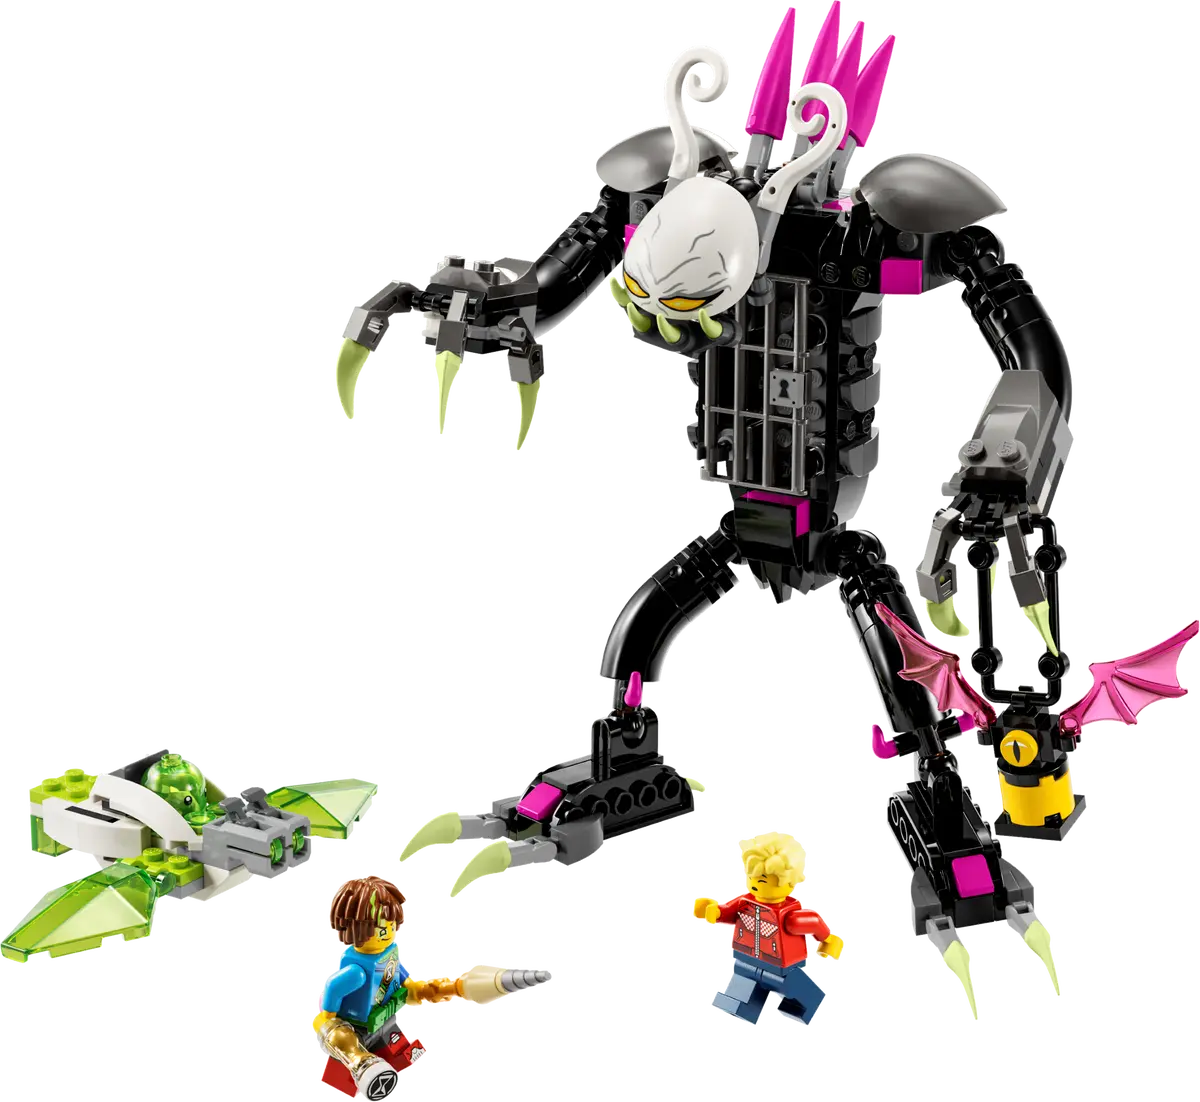 LEGO DREAMZZZ Monstruo de la Jaula 71455